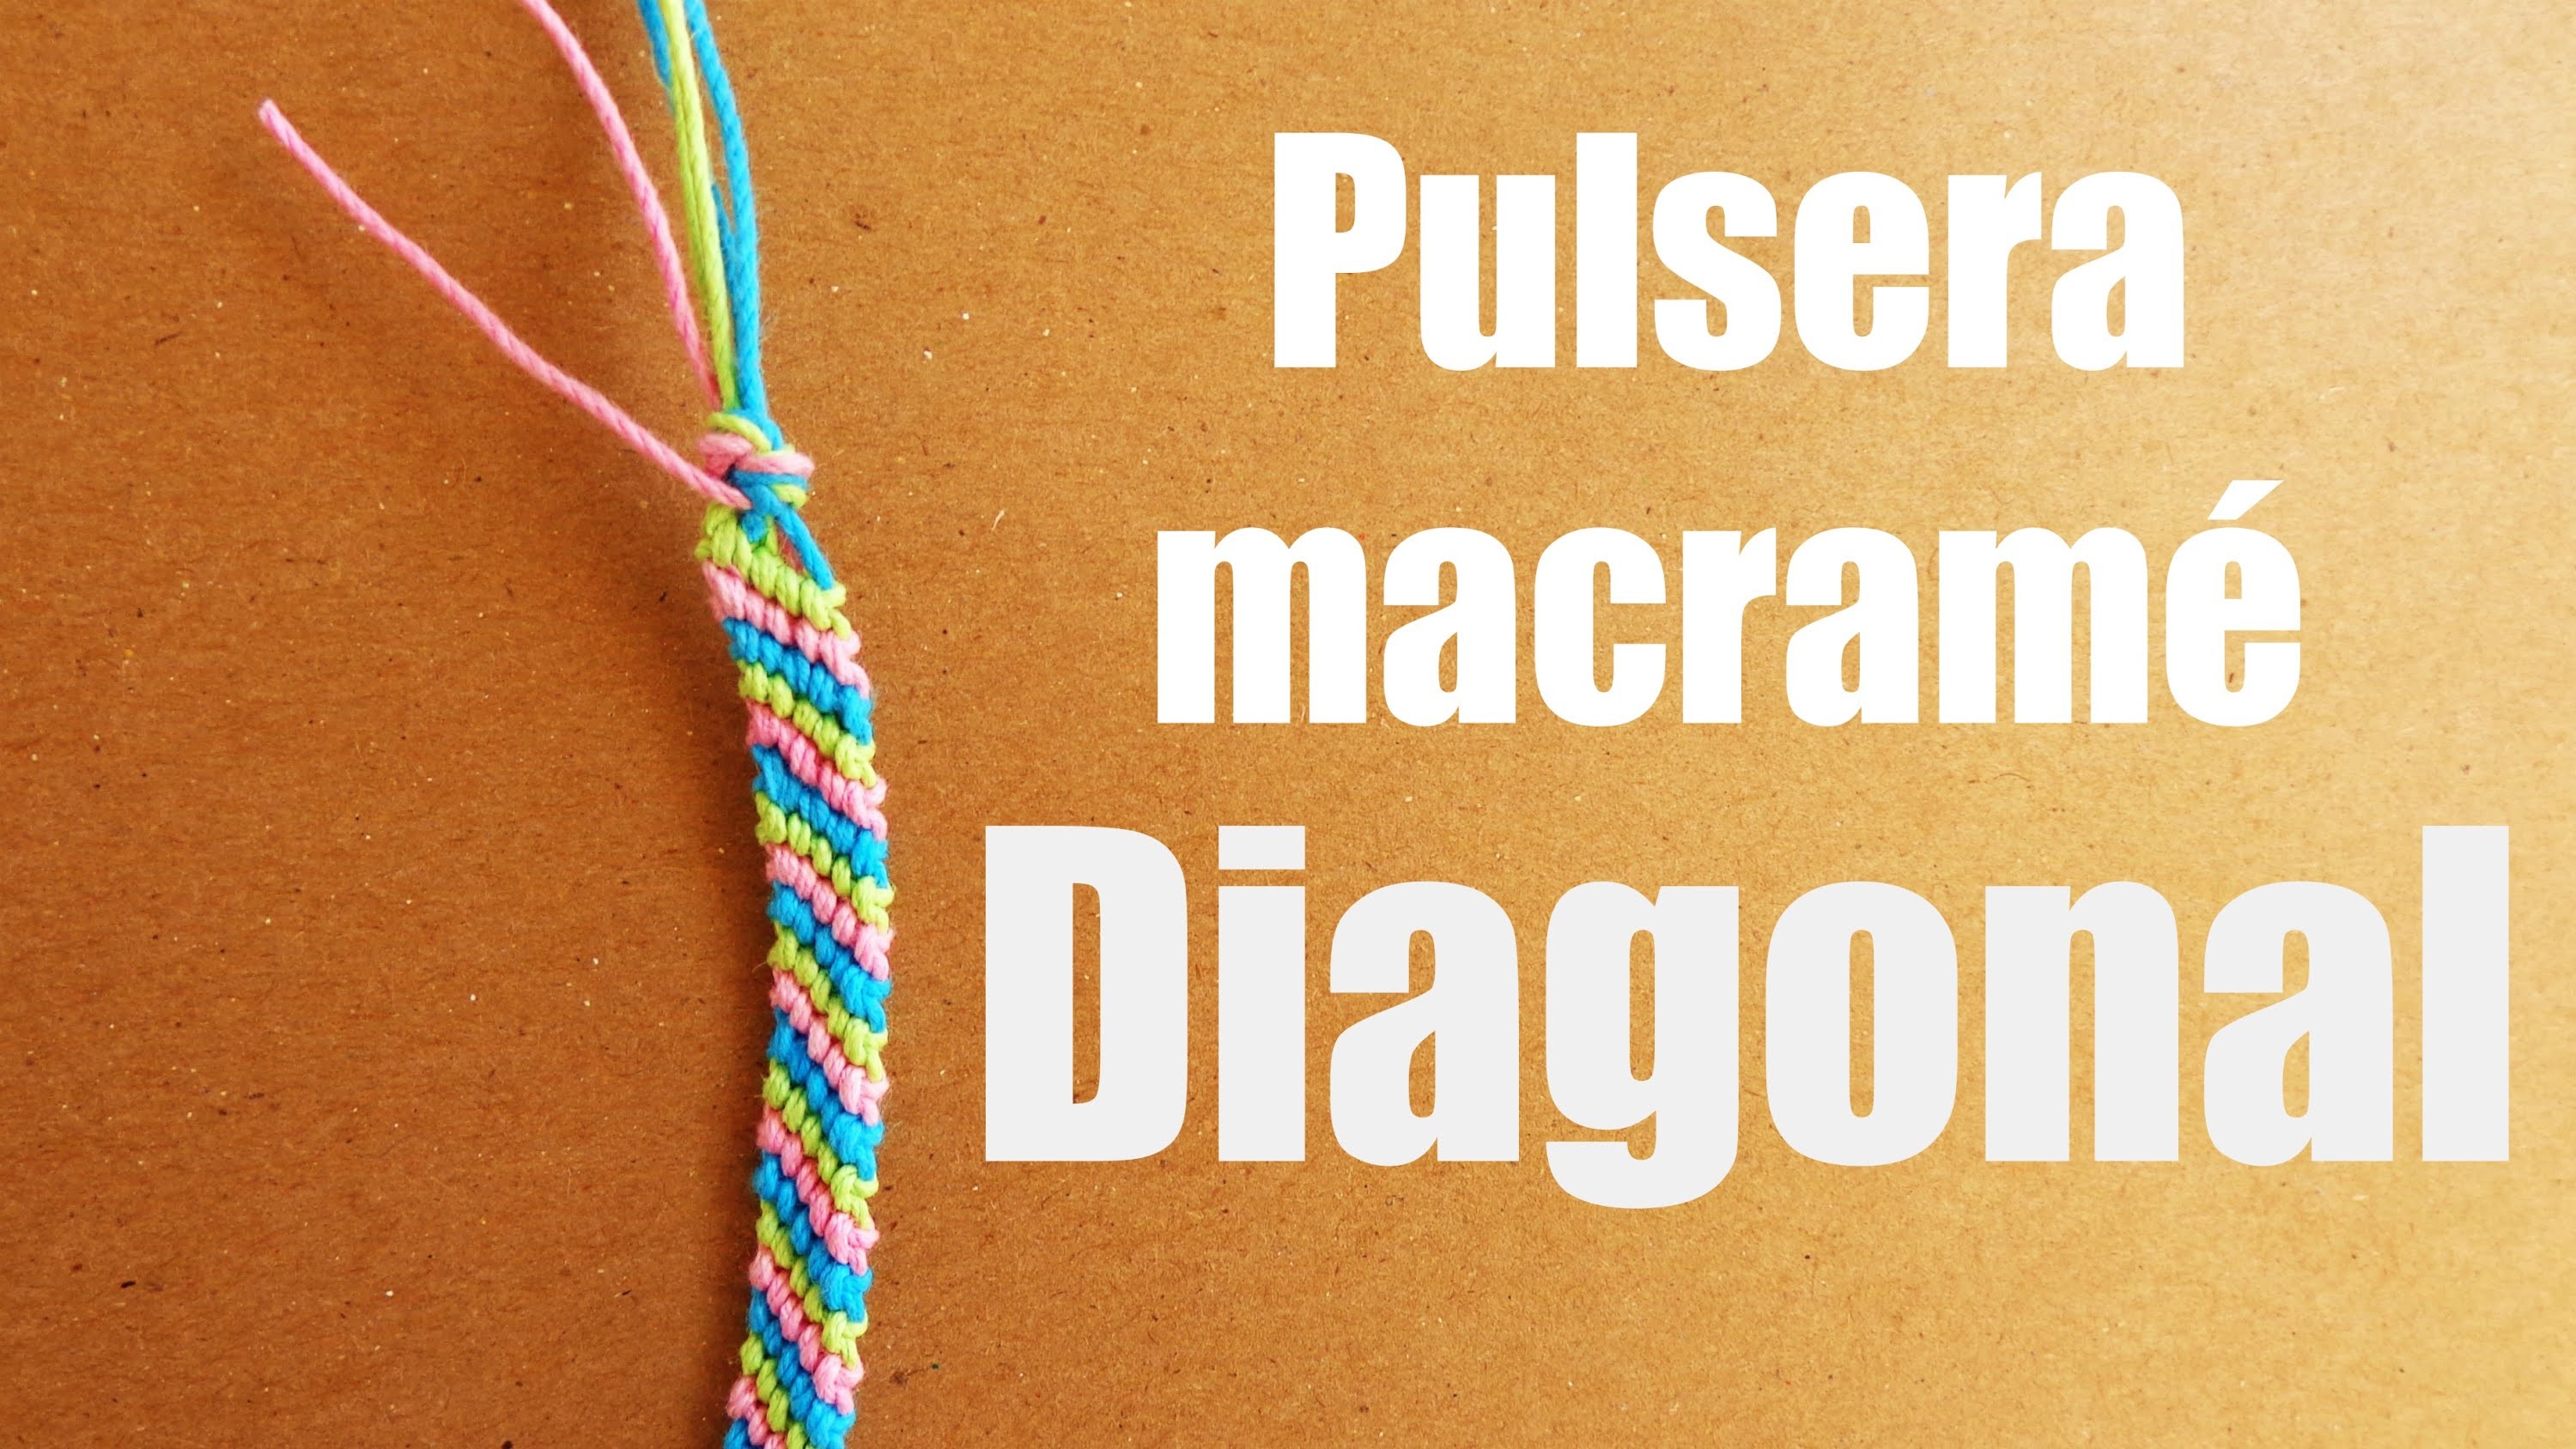 Pulsera Macrame: Diagonal. Pulseras de hilo